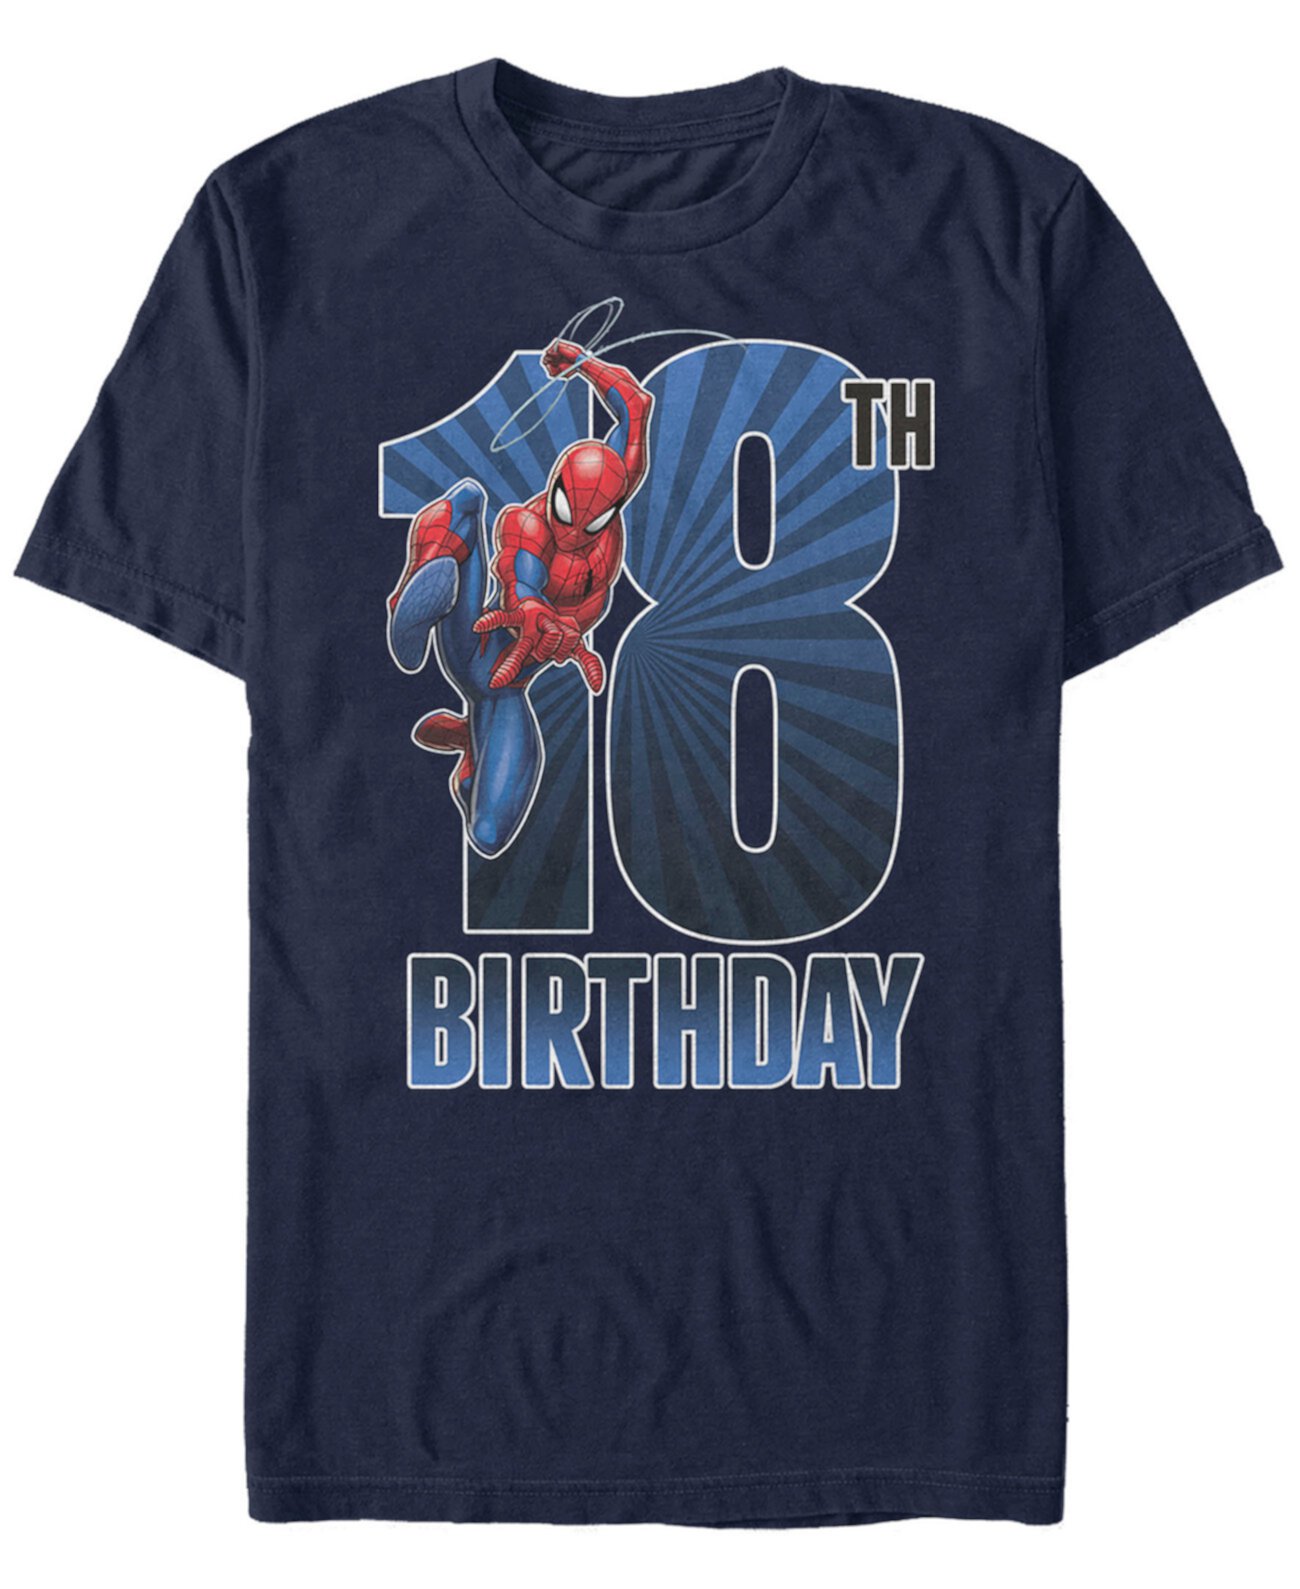 Мужская футболка с короткими рукавами и изображением Человека-паука Fifth Sun Swinging 18th Birthday FIFTH SUN